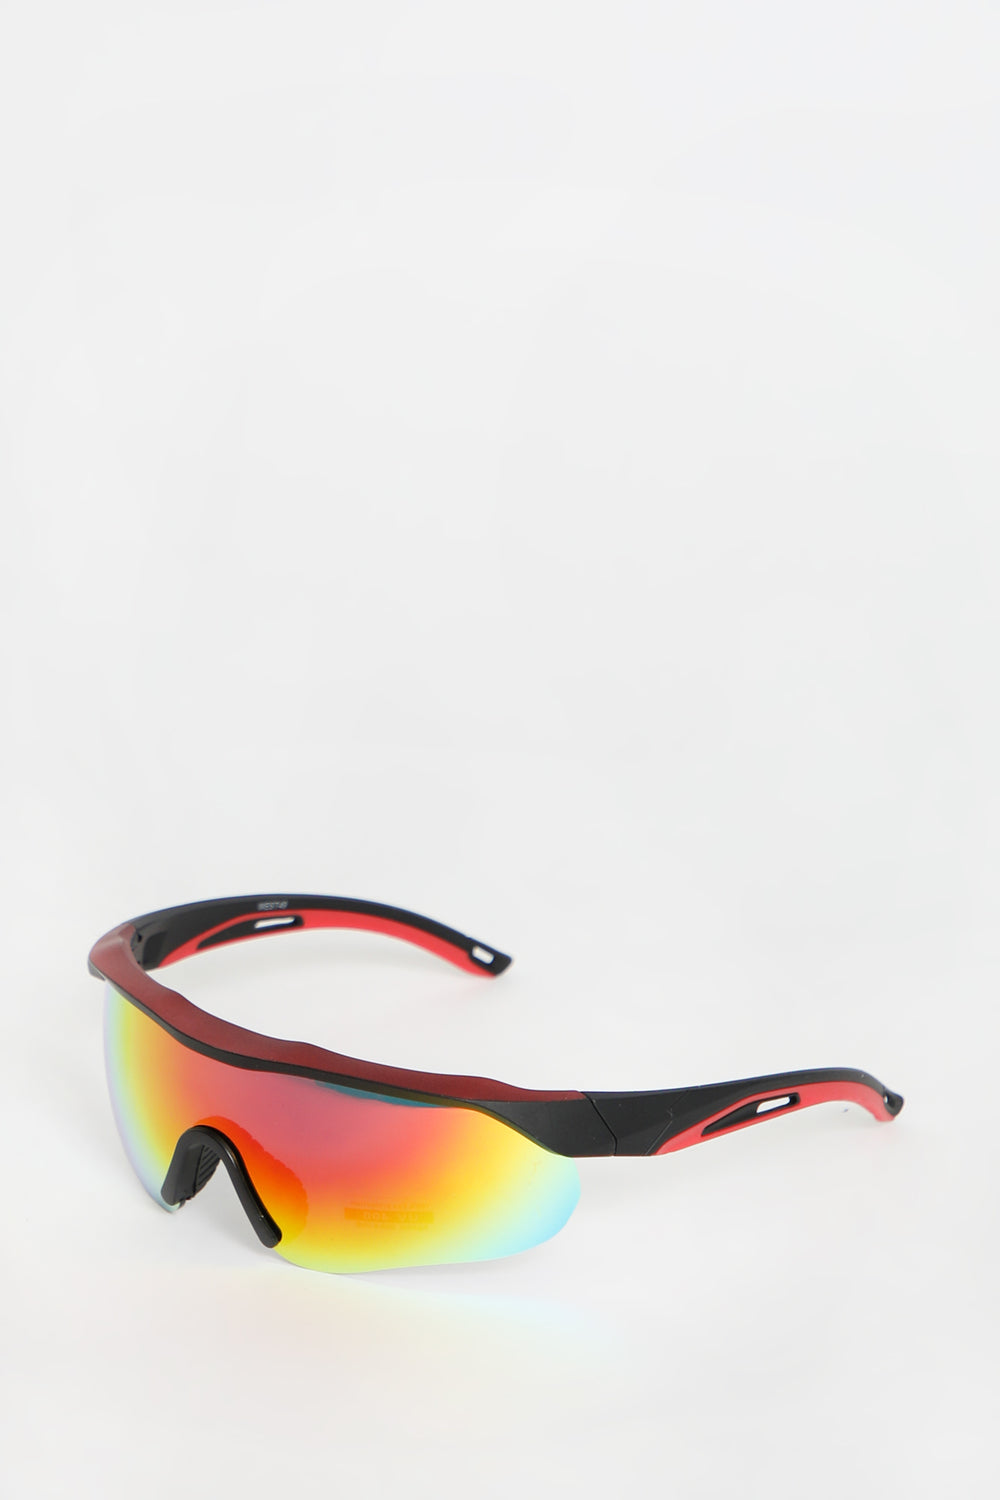 West49 Mirror Sport Sunglasses West49 Mirror Sport Sunglasses